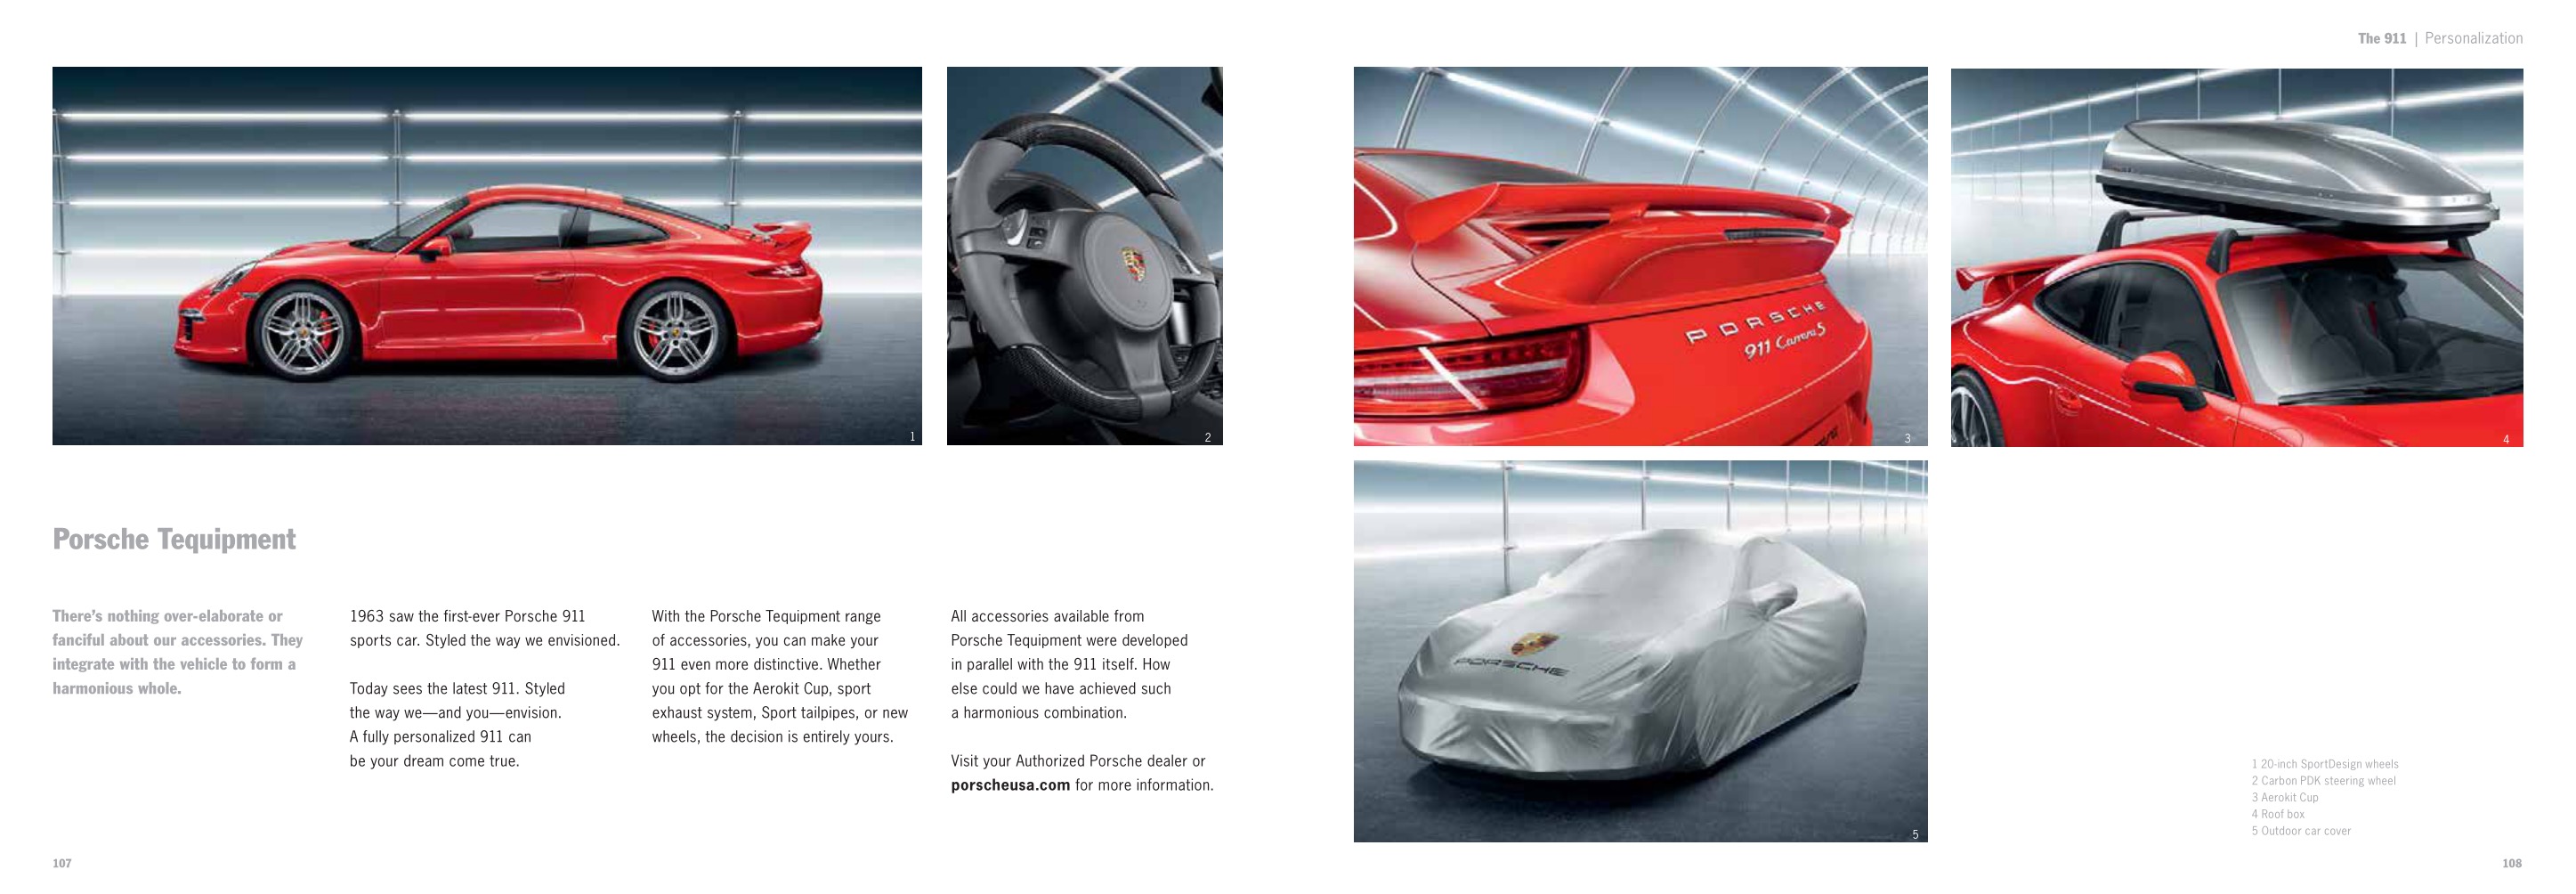 2013 Porsche 911 Brochure Page 23